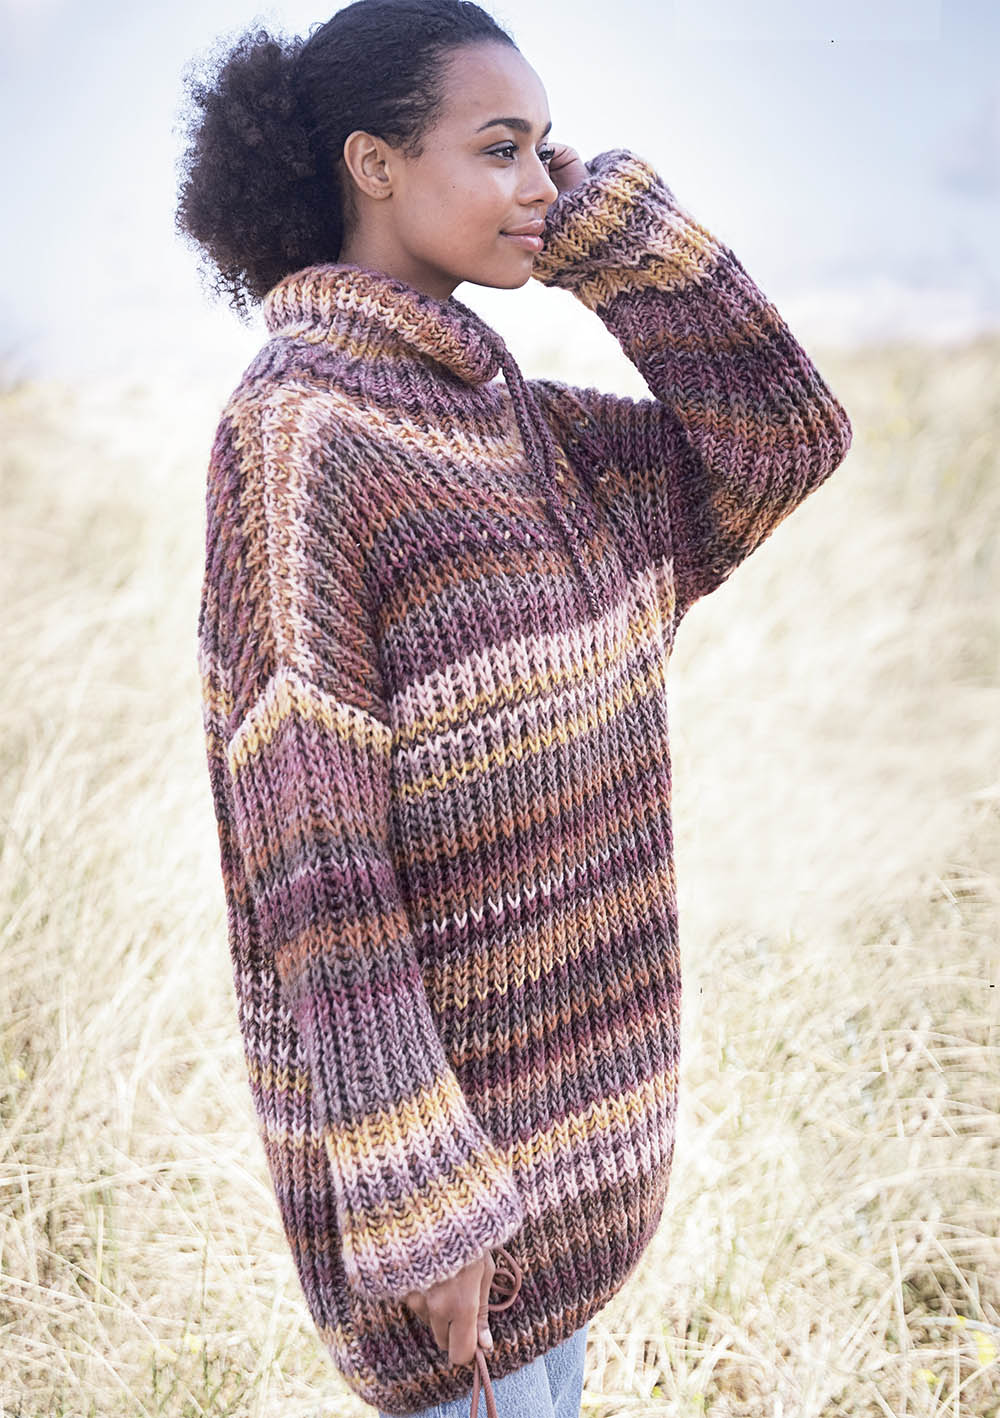 Свитер спицами схемы - 121 женский вязаный свитер